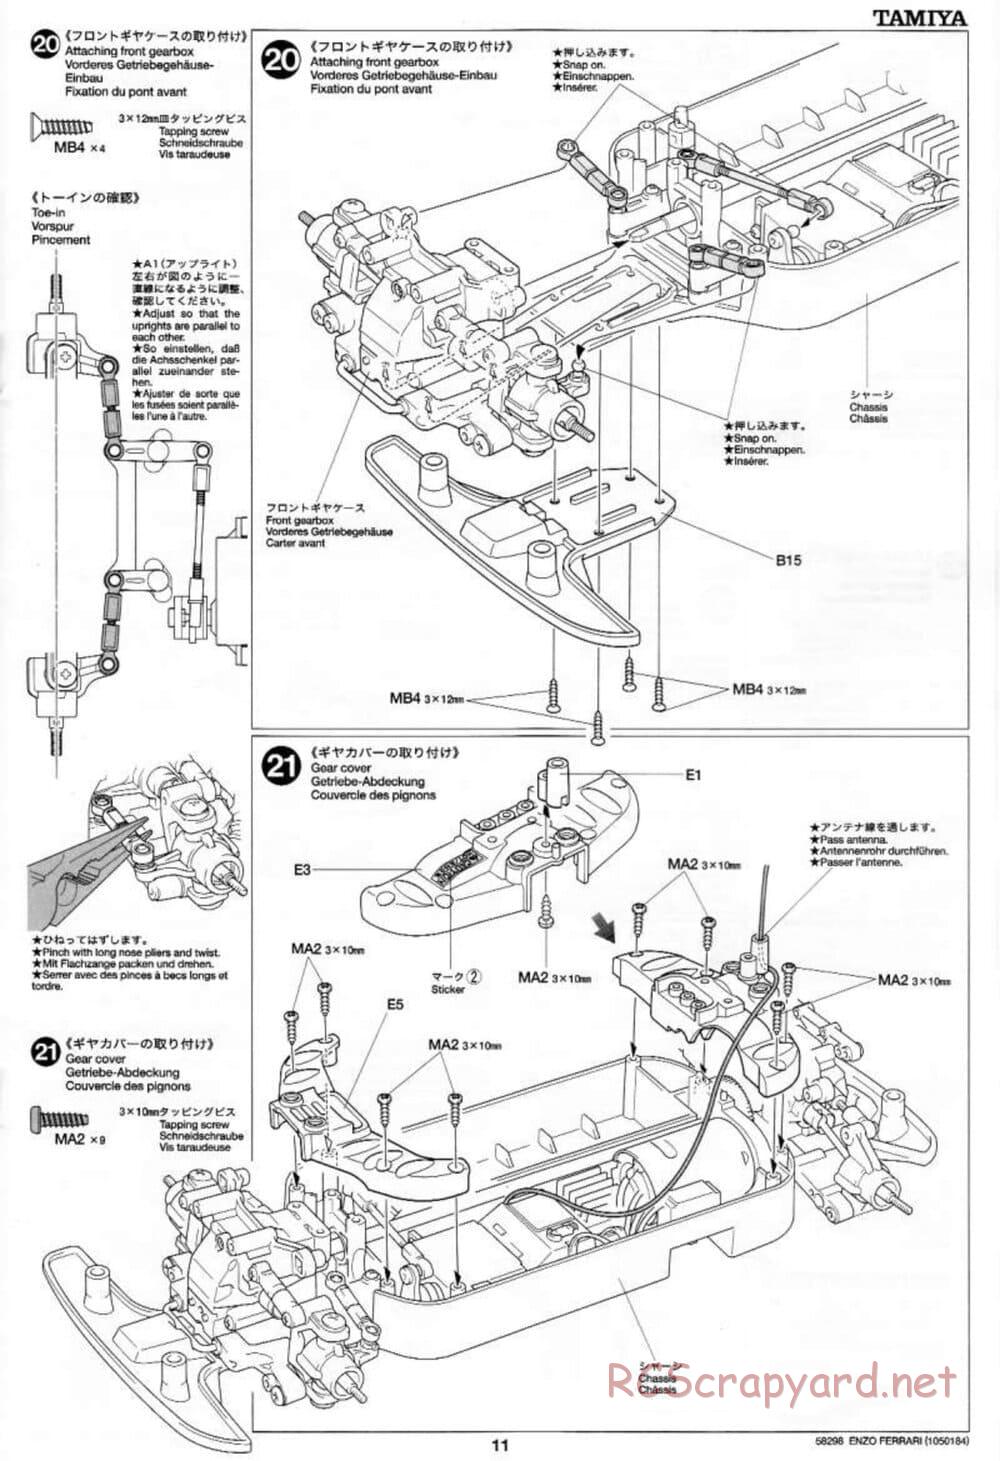 Tamiya - Enzo Ferrari - TB-01 Chassis - Manual - Page 11